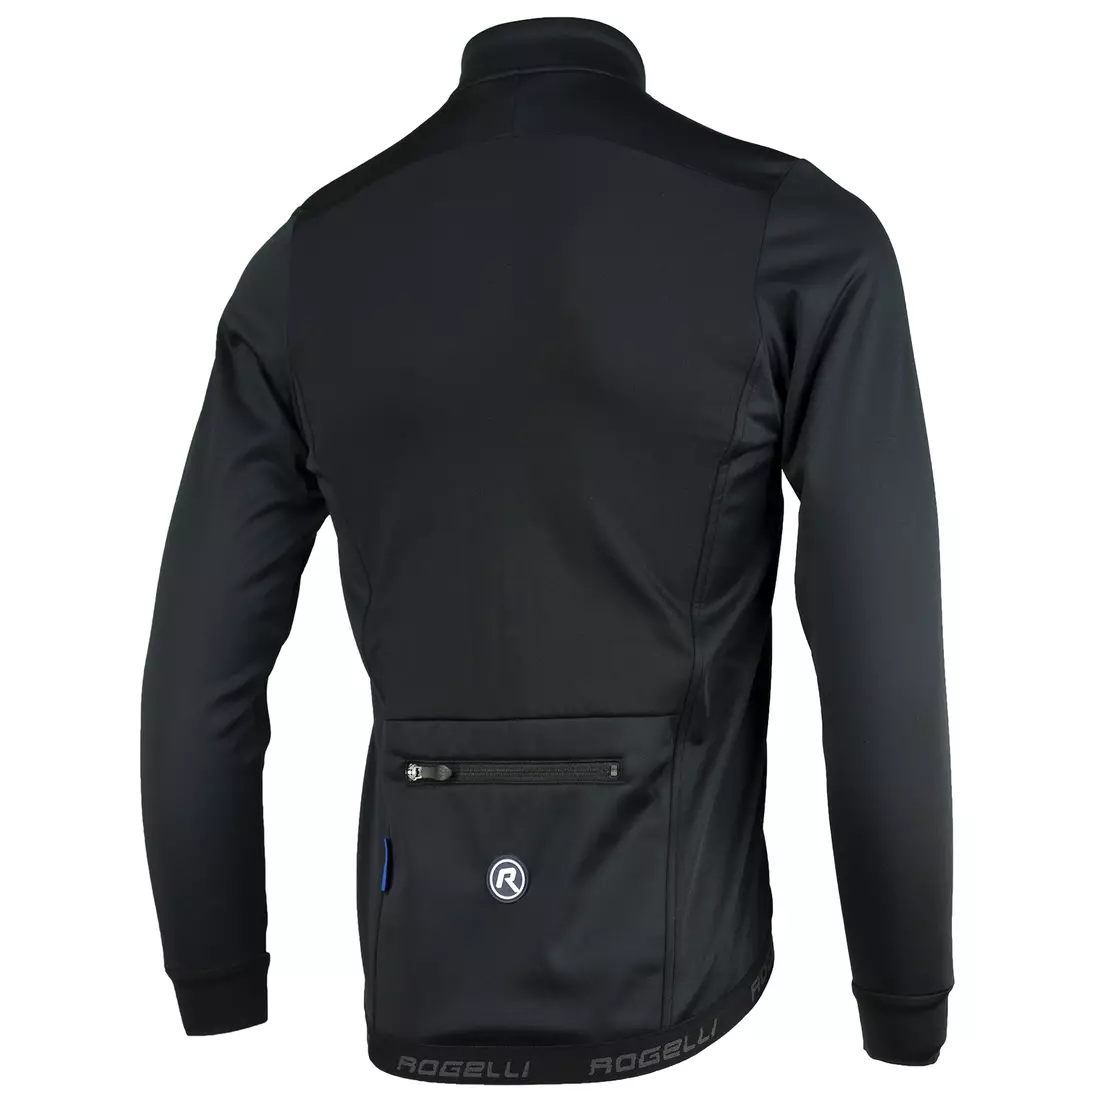 ROGELLI PESARO 2.0 zimná cyklistická bunda, čierna